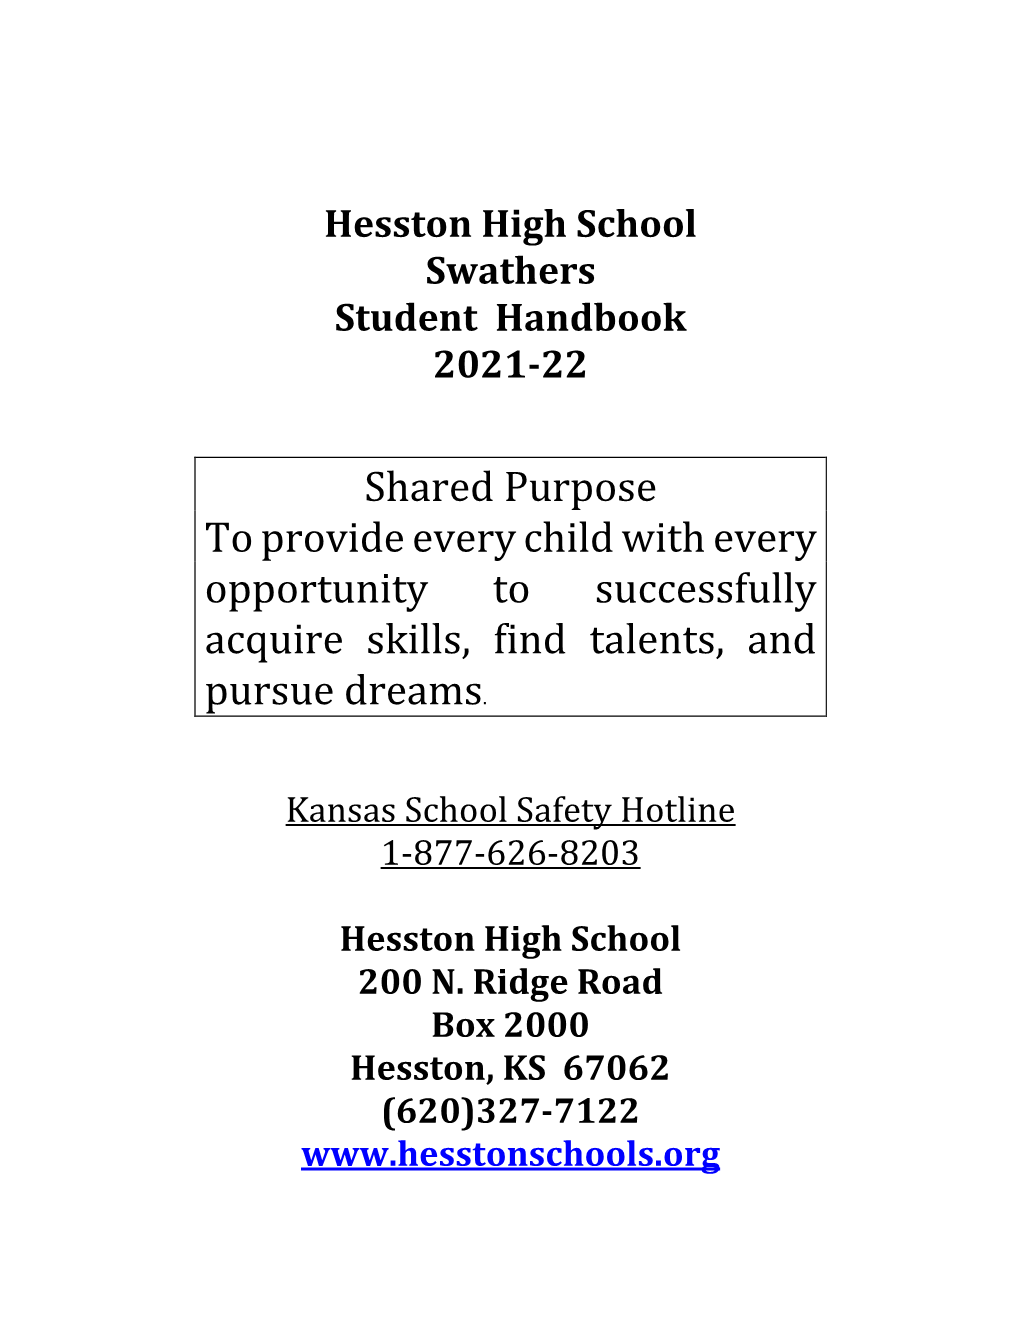 Hesston High School Swathers Student Handbook 2021-22